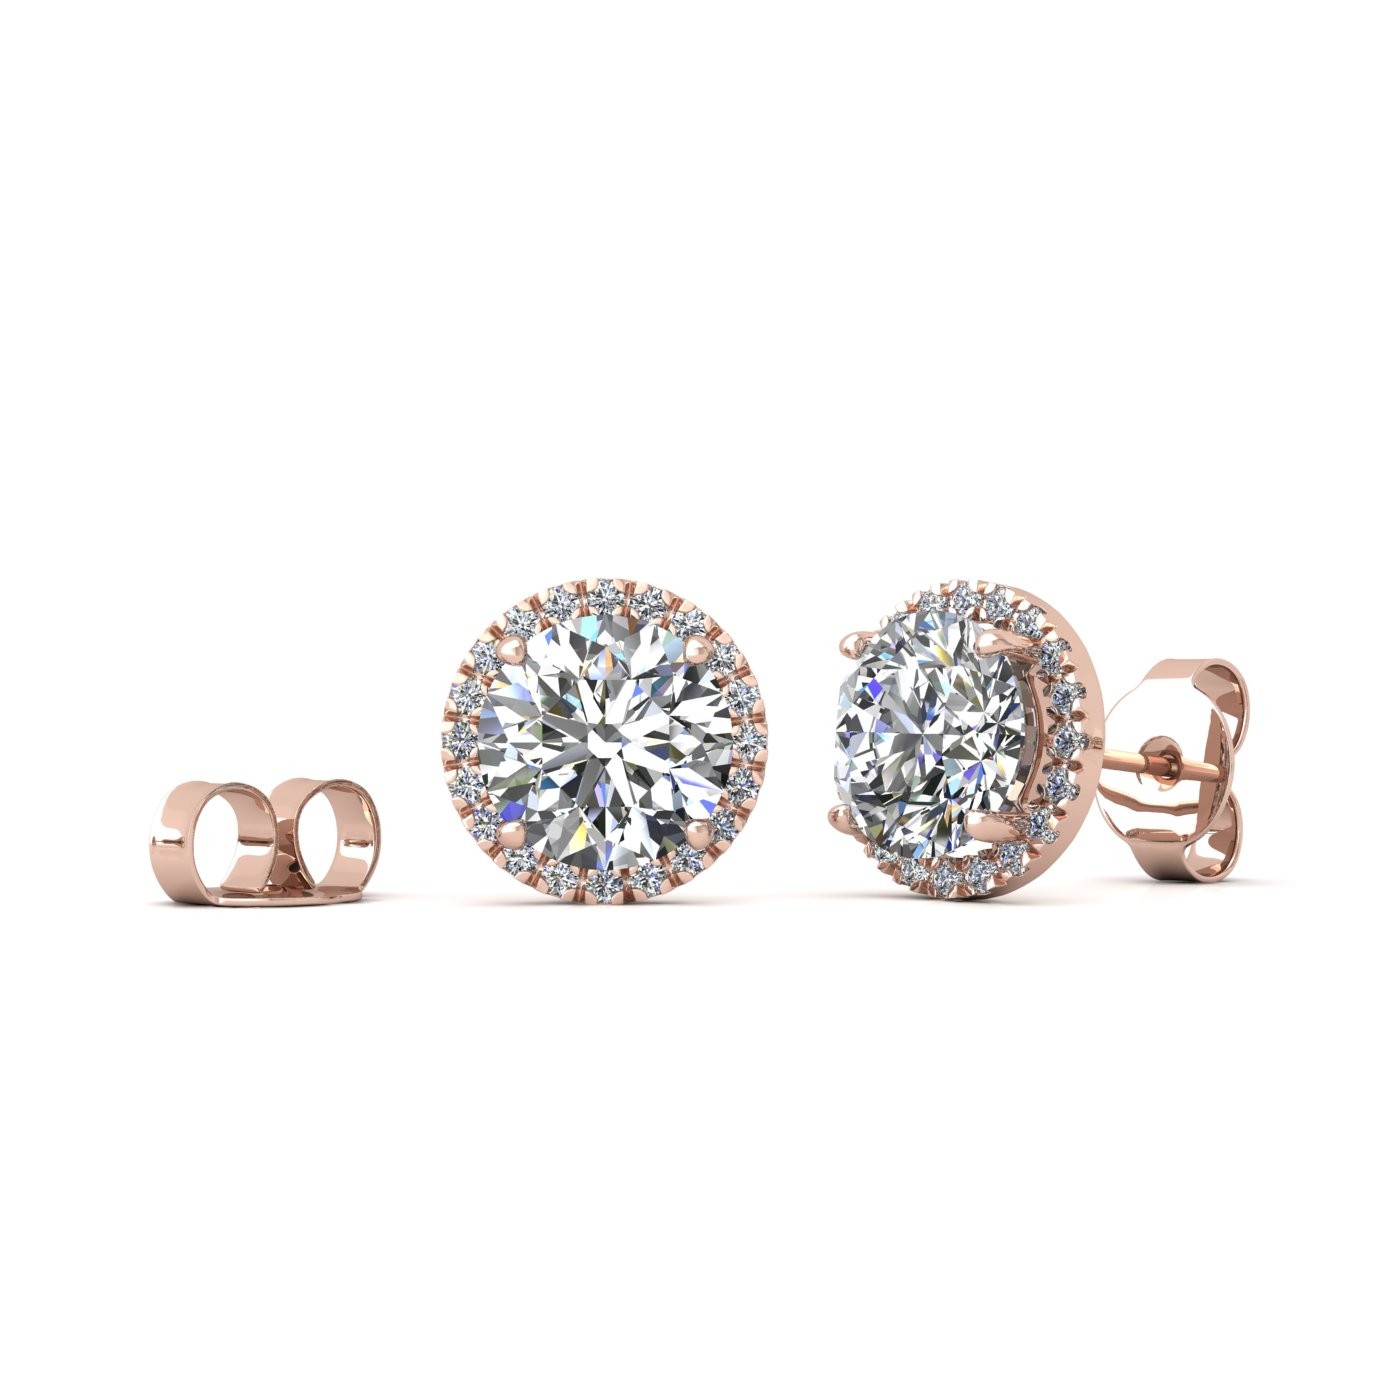 18k rose gold  0,7 ct each (1,4 tcw) 4 prongs round shape diamond earrings with diamond pavÉ set halo